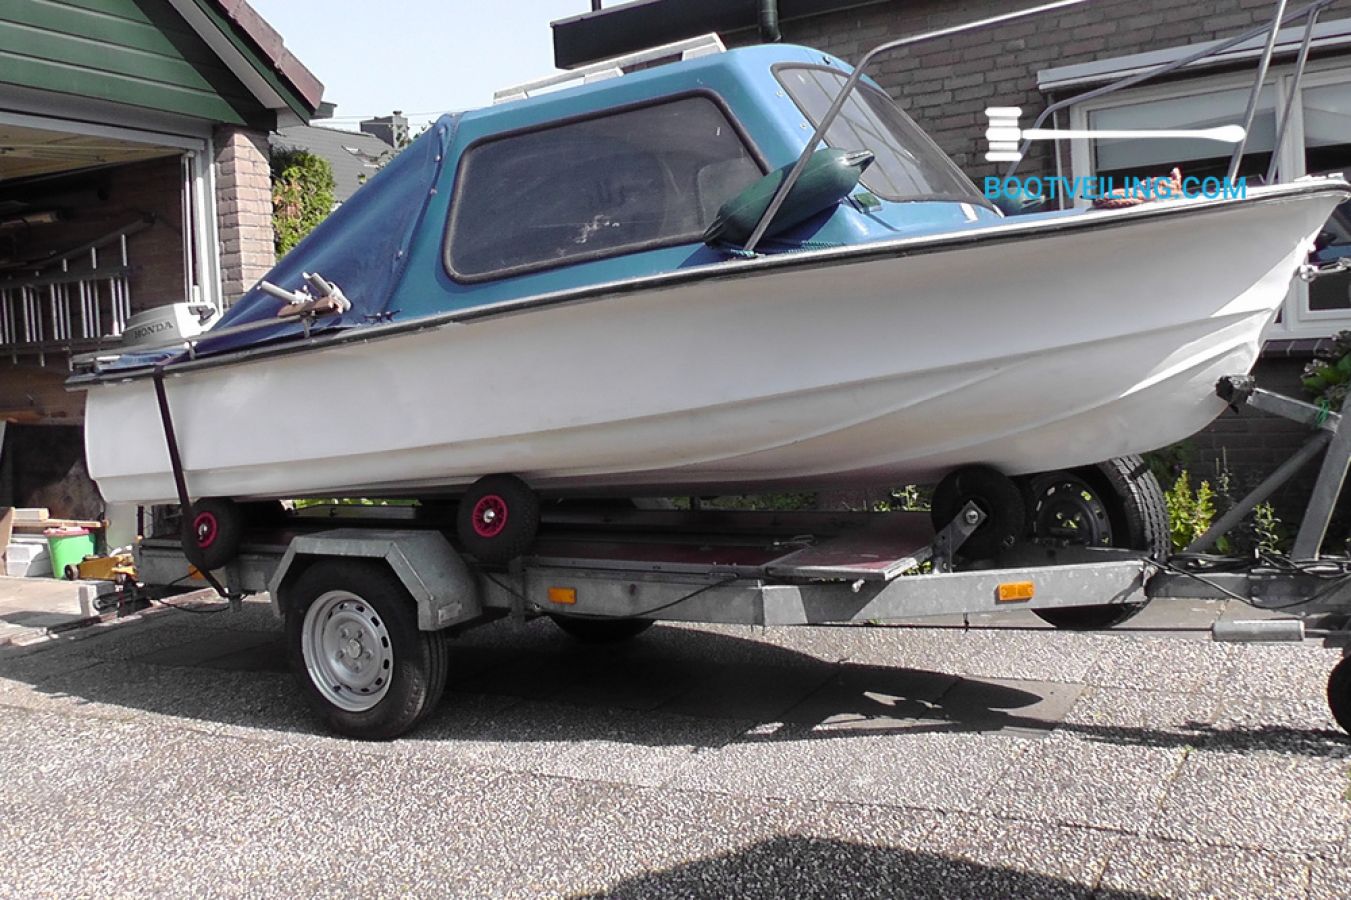 Kaliber tevredenheid Anoi Kajuitboot - 400 - Motorjacht te koop - Bootveiling.com